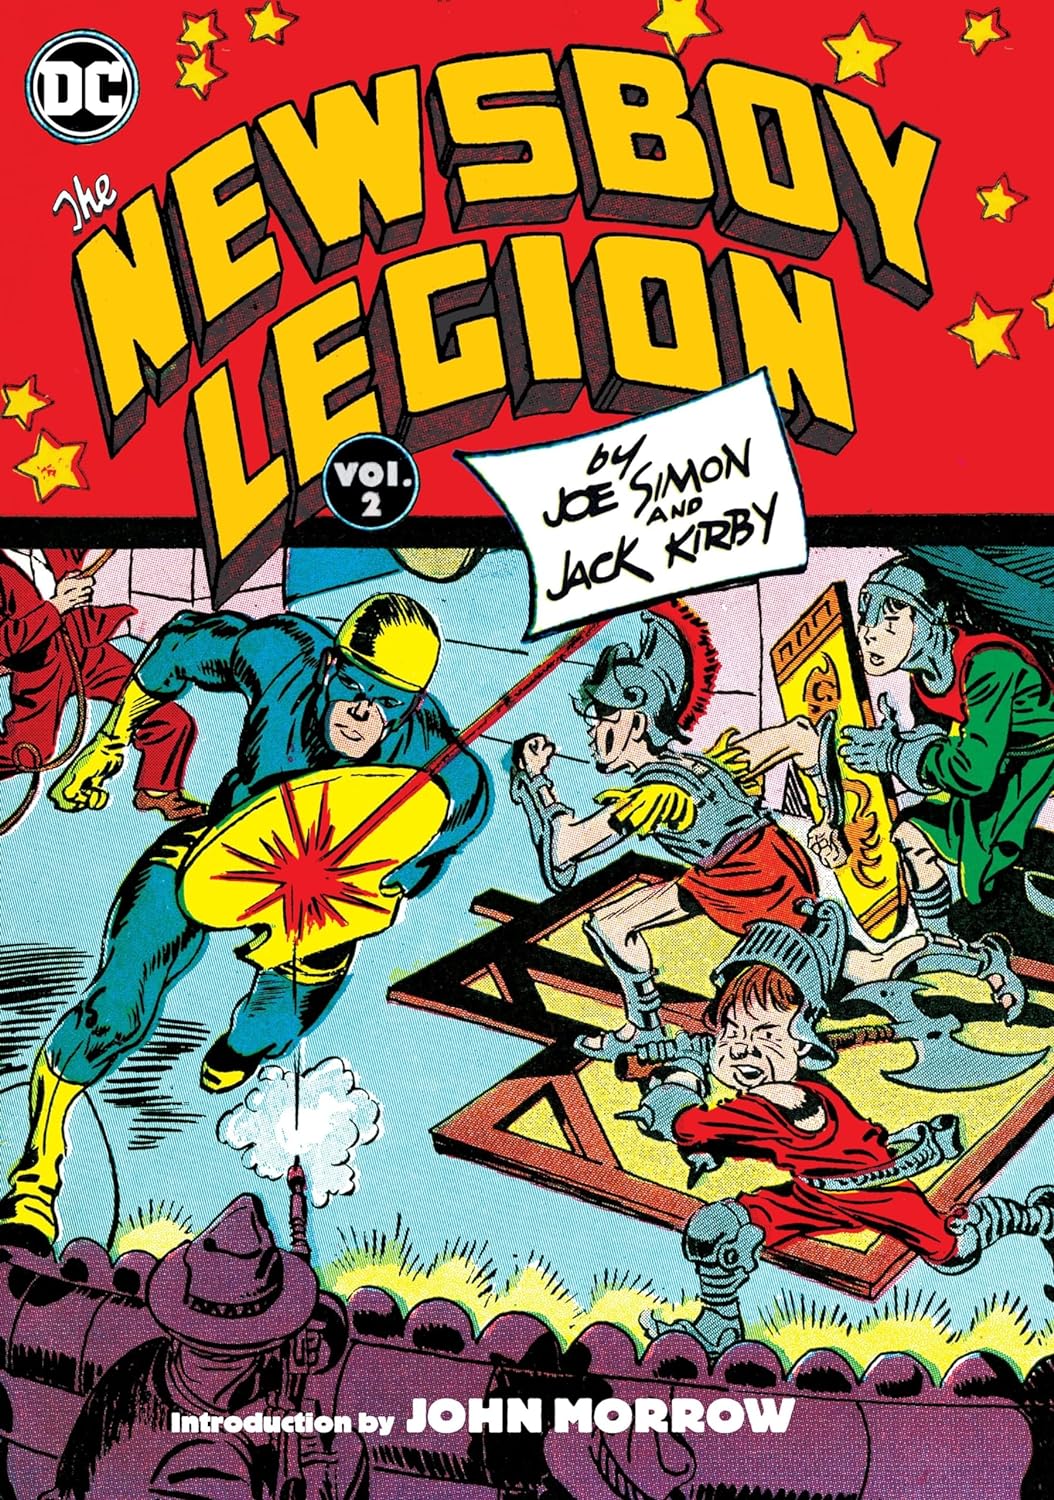 Newsboy Legion by Simon And Kirby Hardcover Volume 2